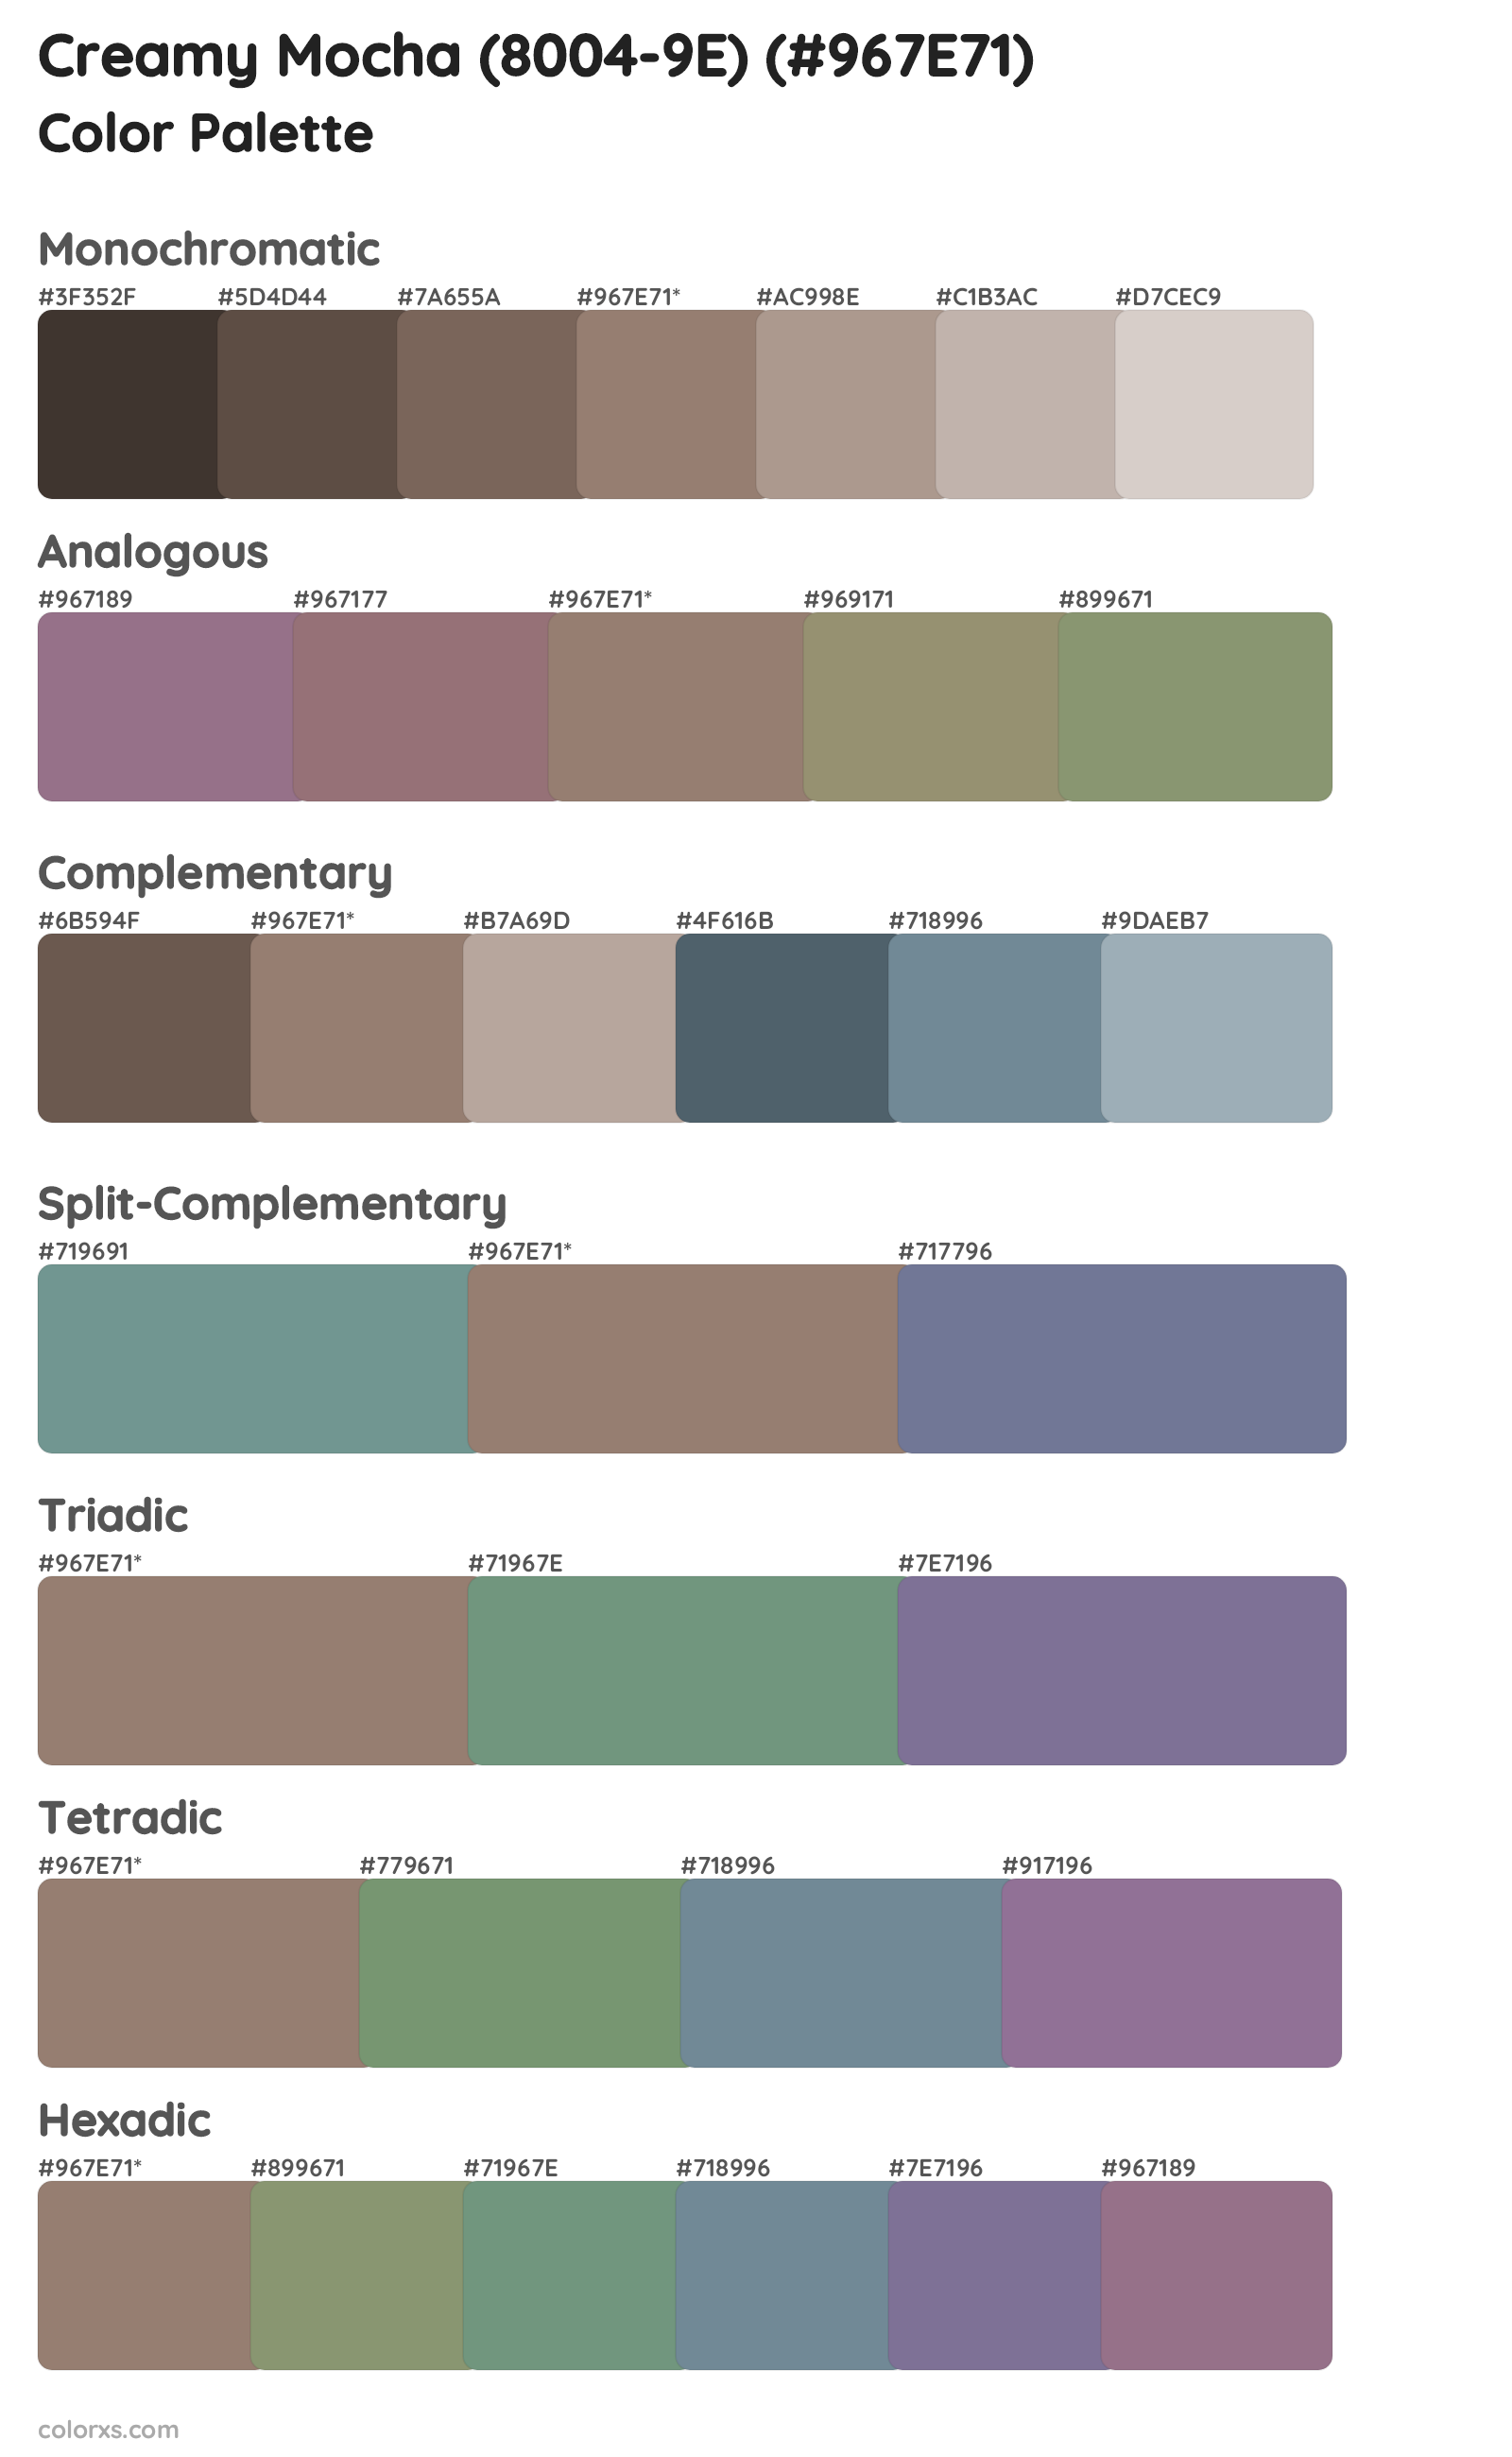 Creamy Mocha (8004-9E) Color Scheme Palettes